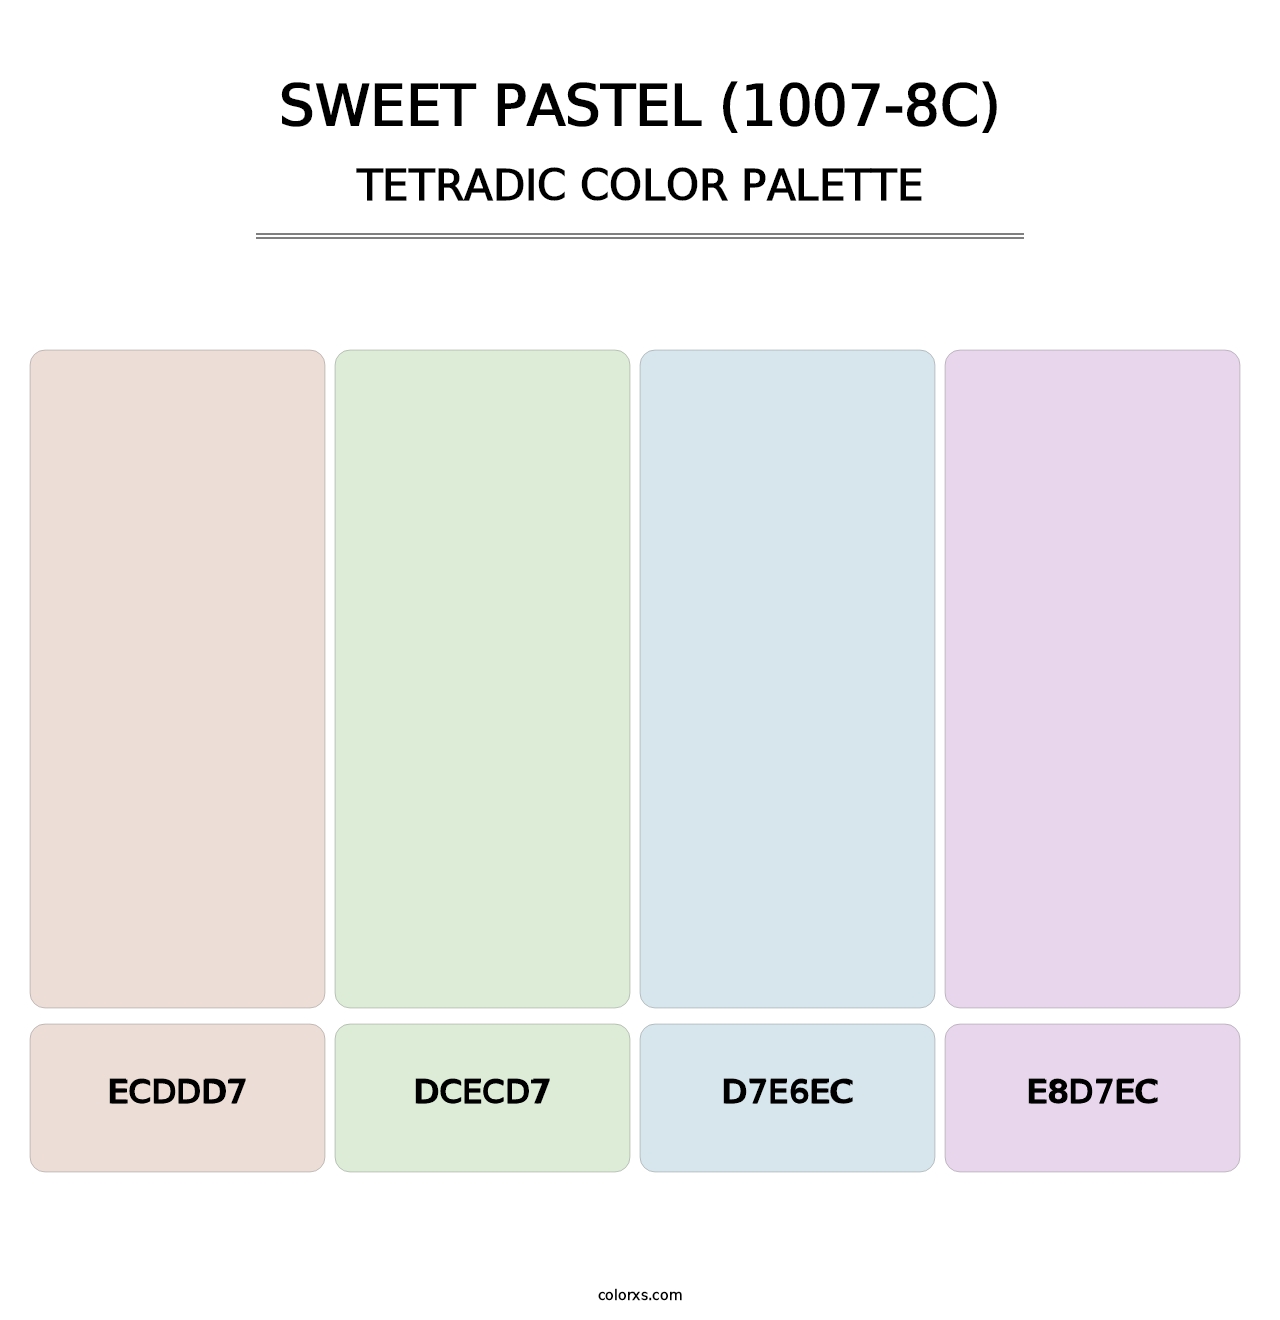 Sweet Pastel (1007-8C) - Tetradic Color Palette